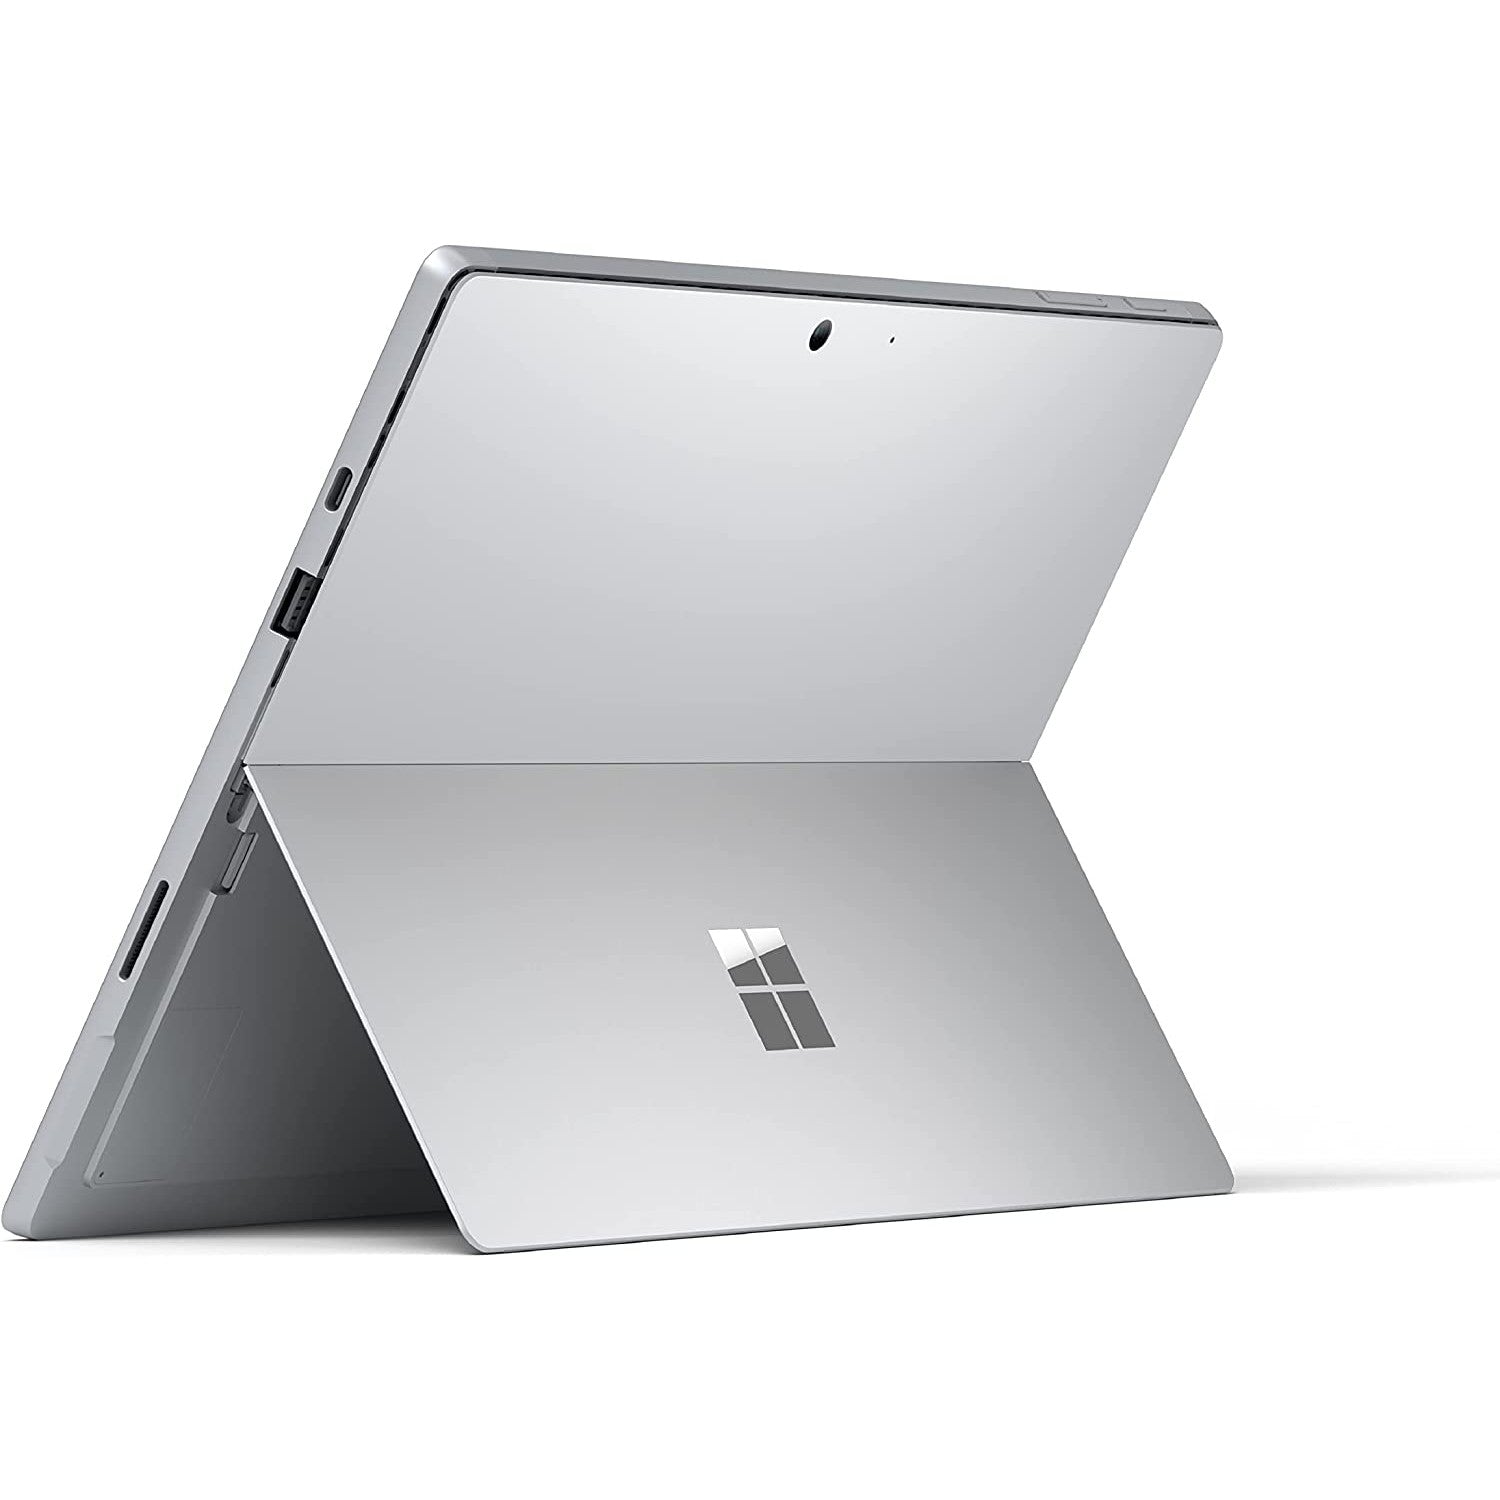 Microsoft Surface Pro 7 1866 Intel Core i5-1035G4 8GB RAM 256GB SSD 12.3" - Grey